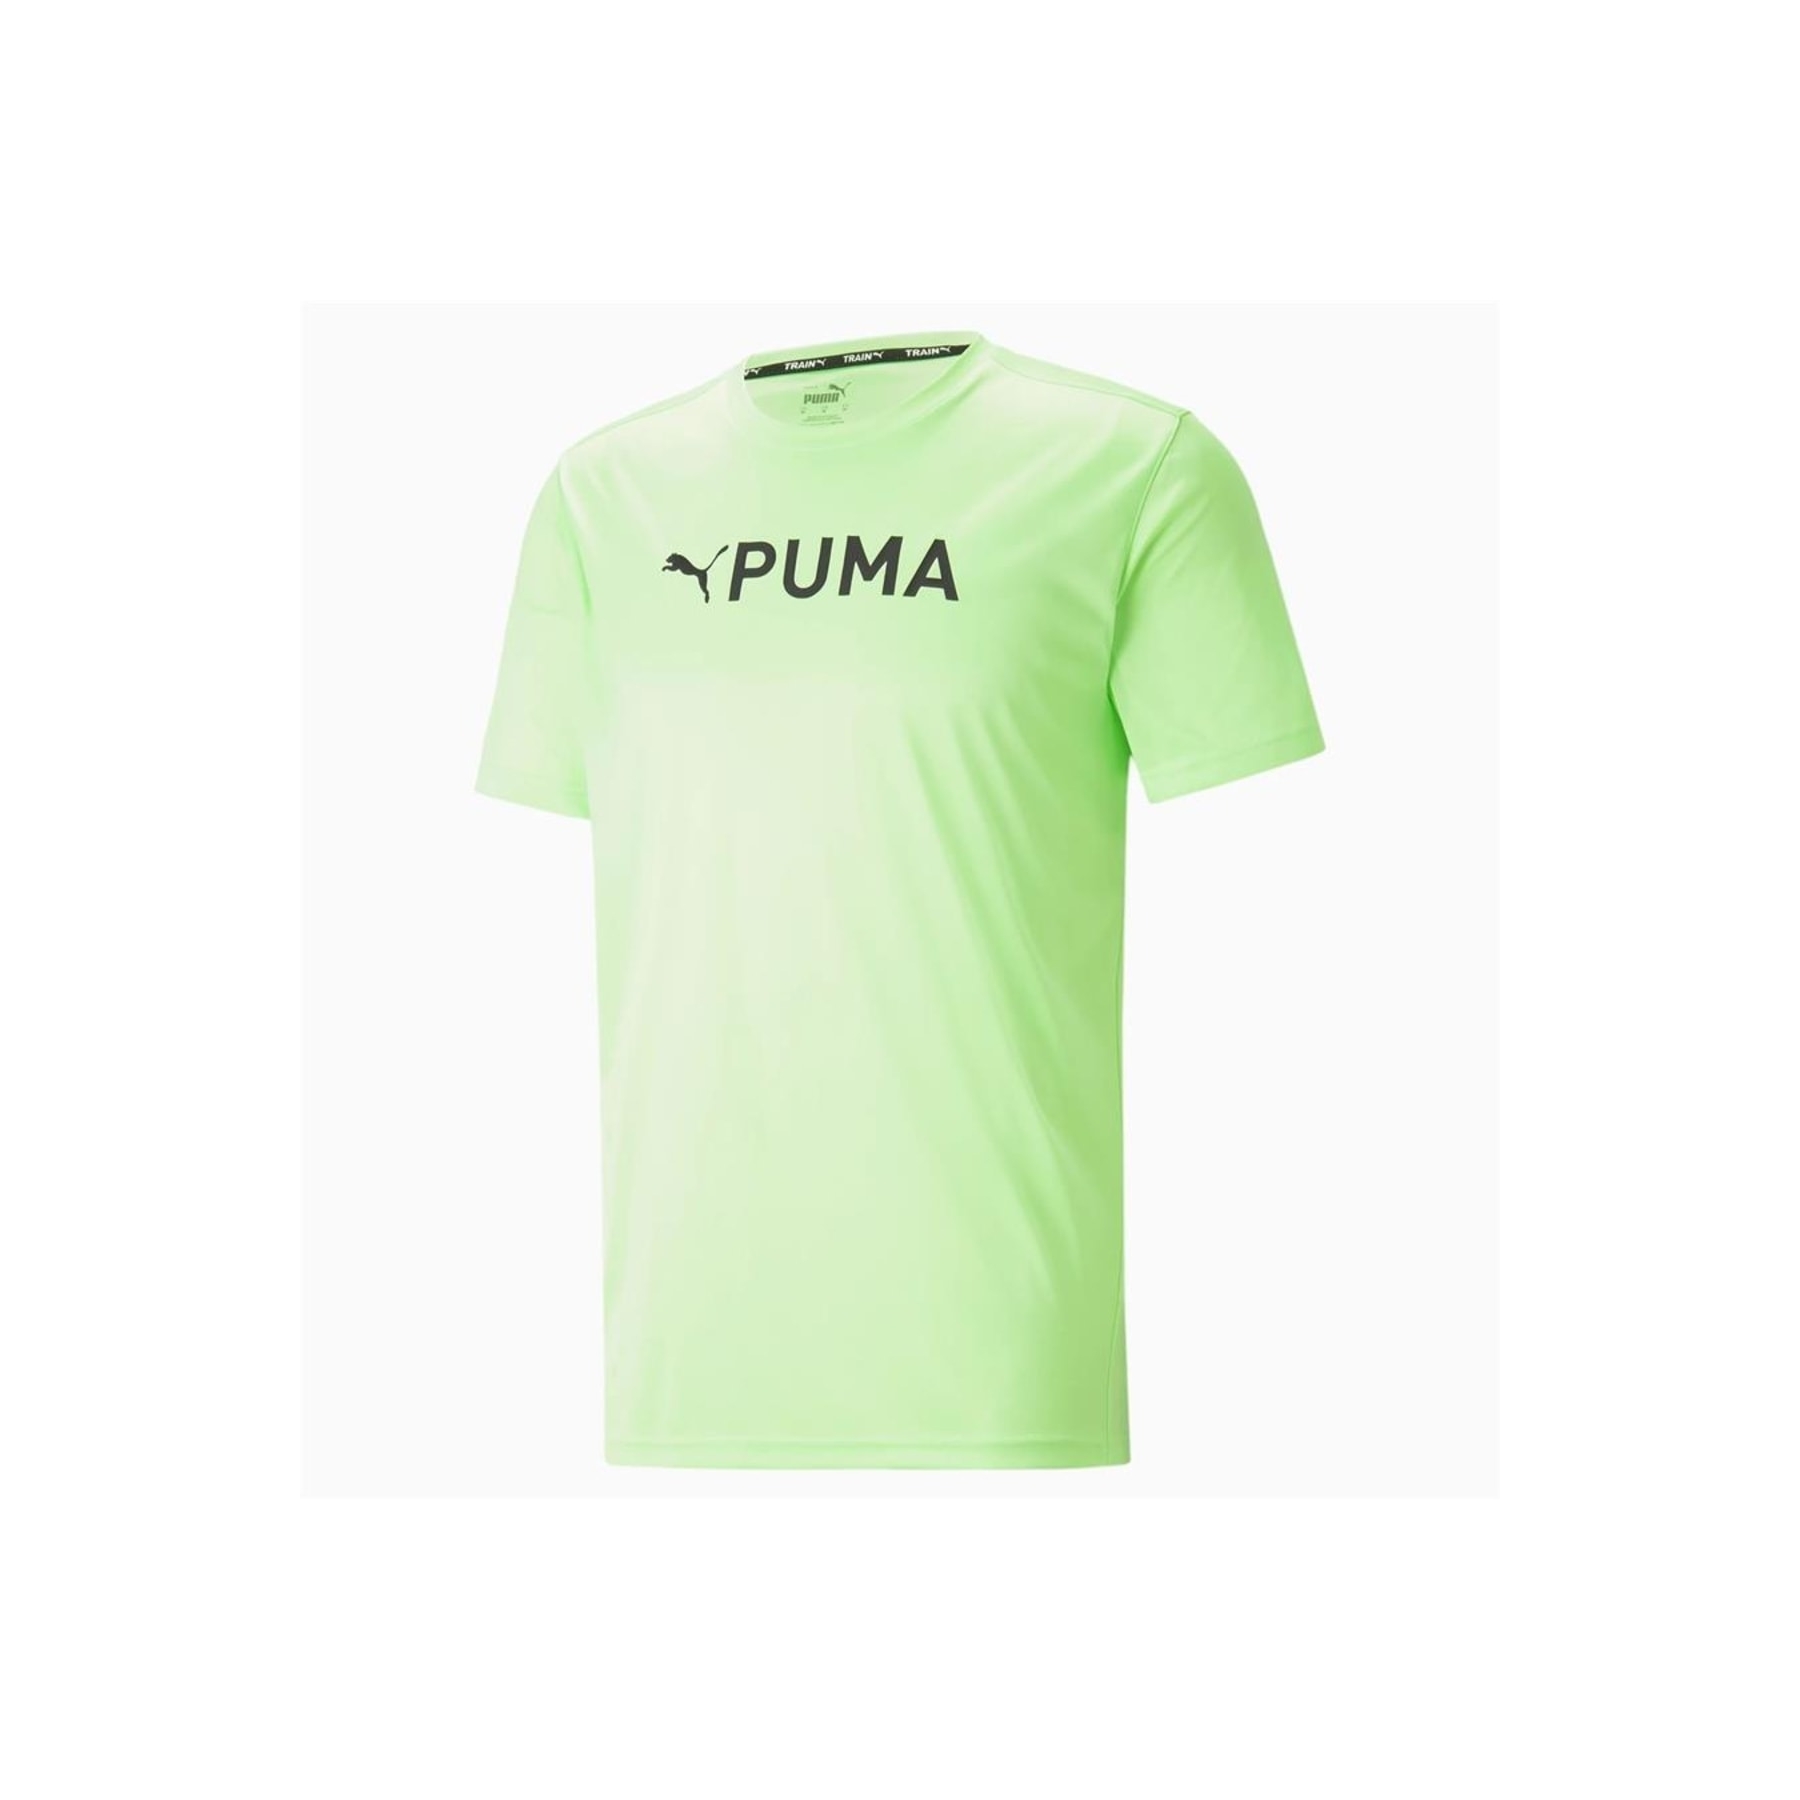 Puma Fit Logo Graphic Erkek Yeşil Tişört (523098-34)